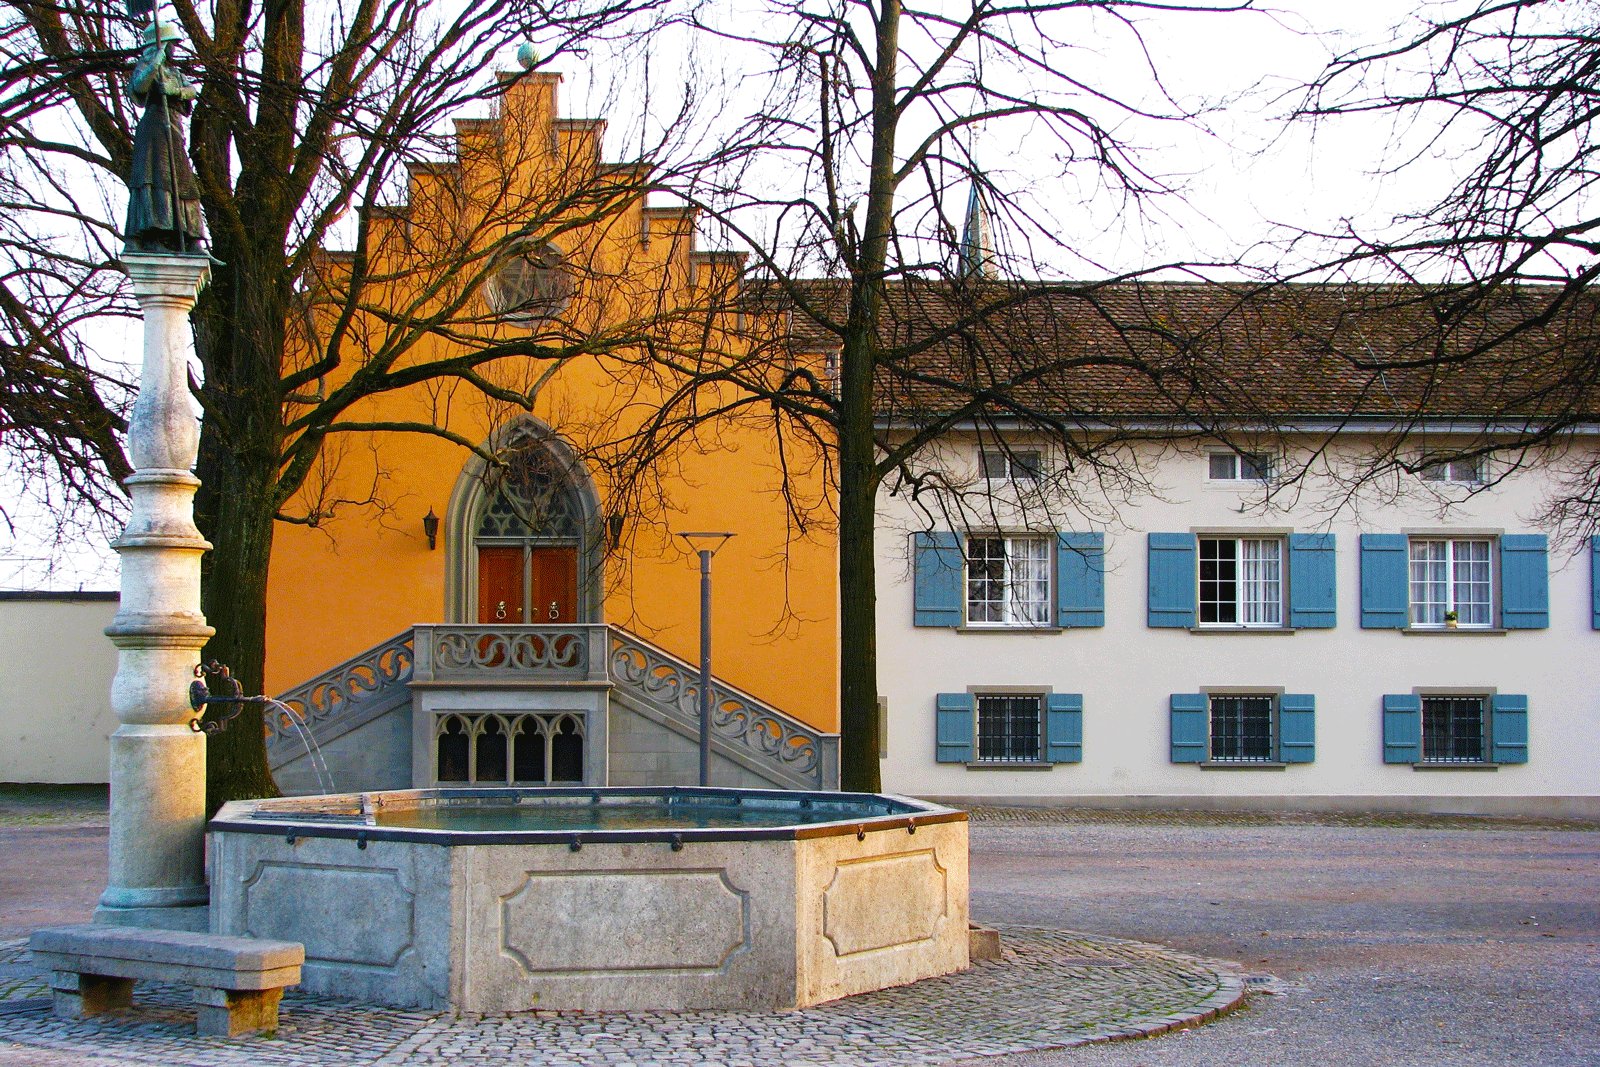 How to visit Freemason lodge in Zurich